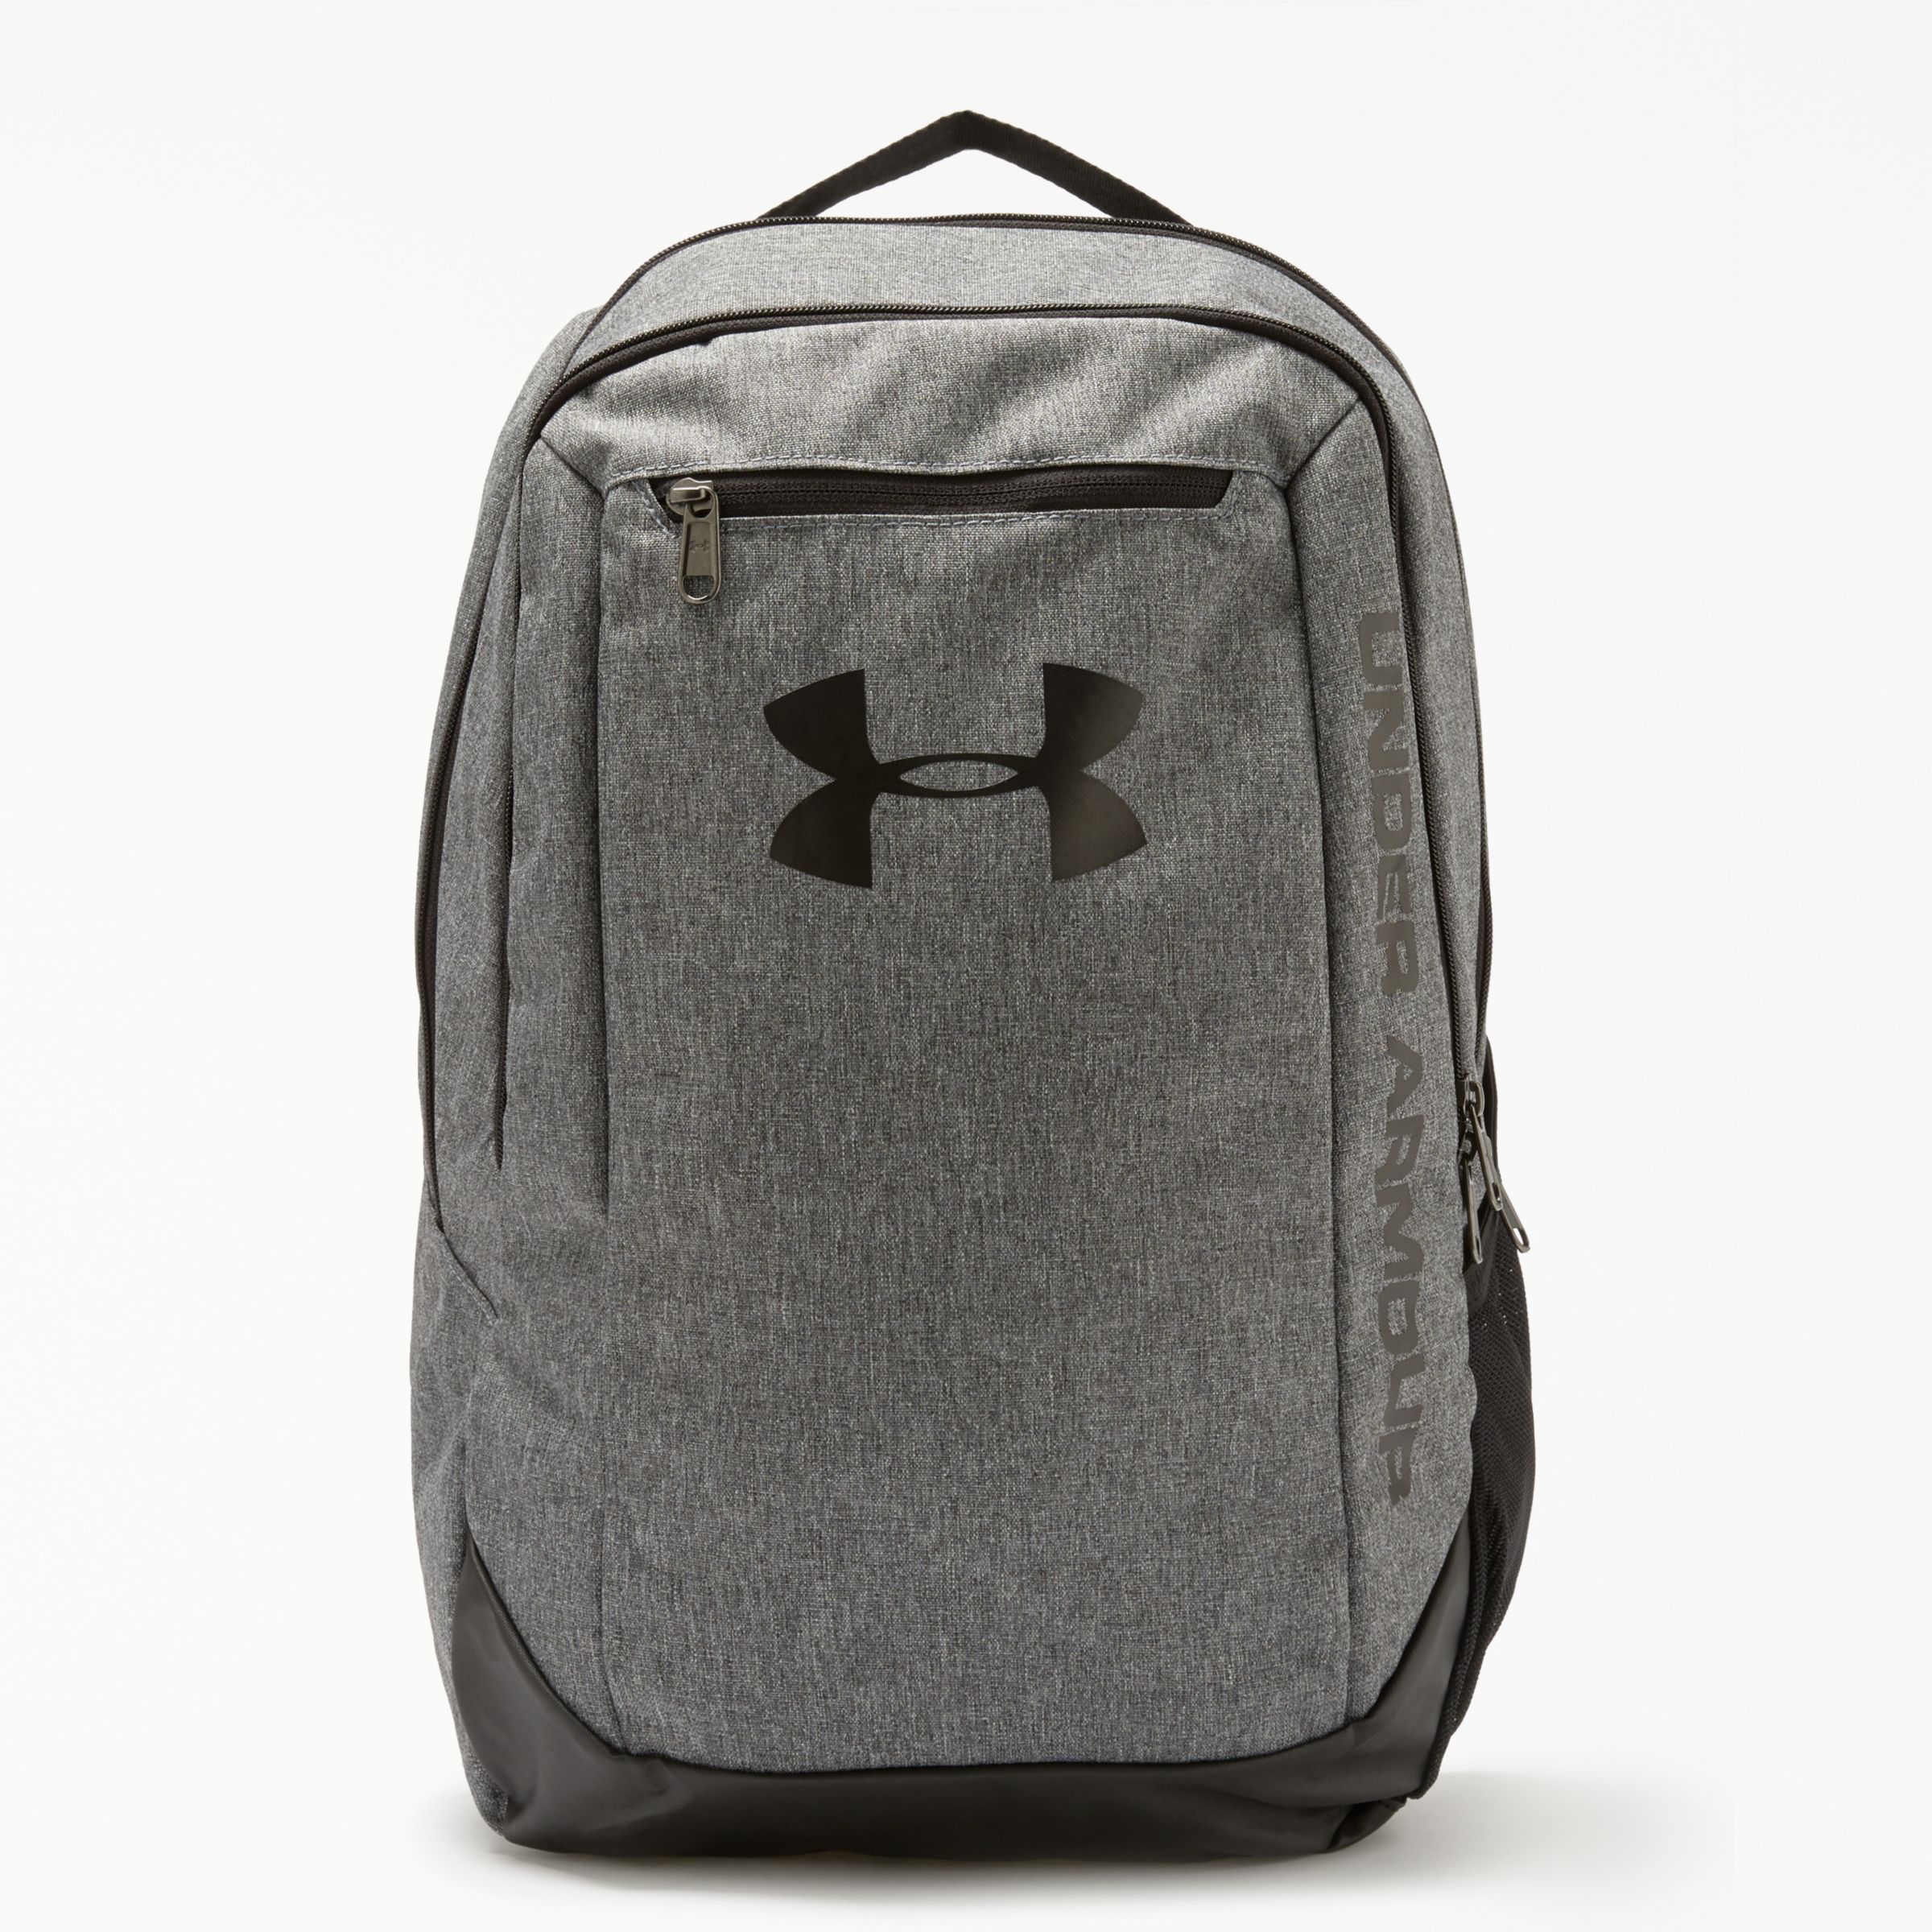 grey under armor backpack